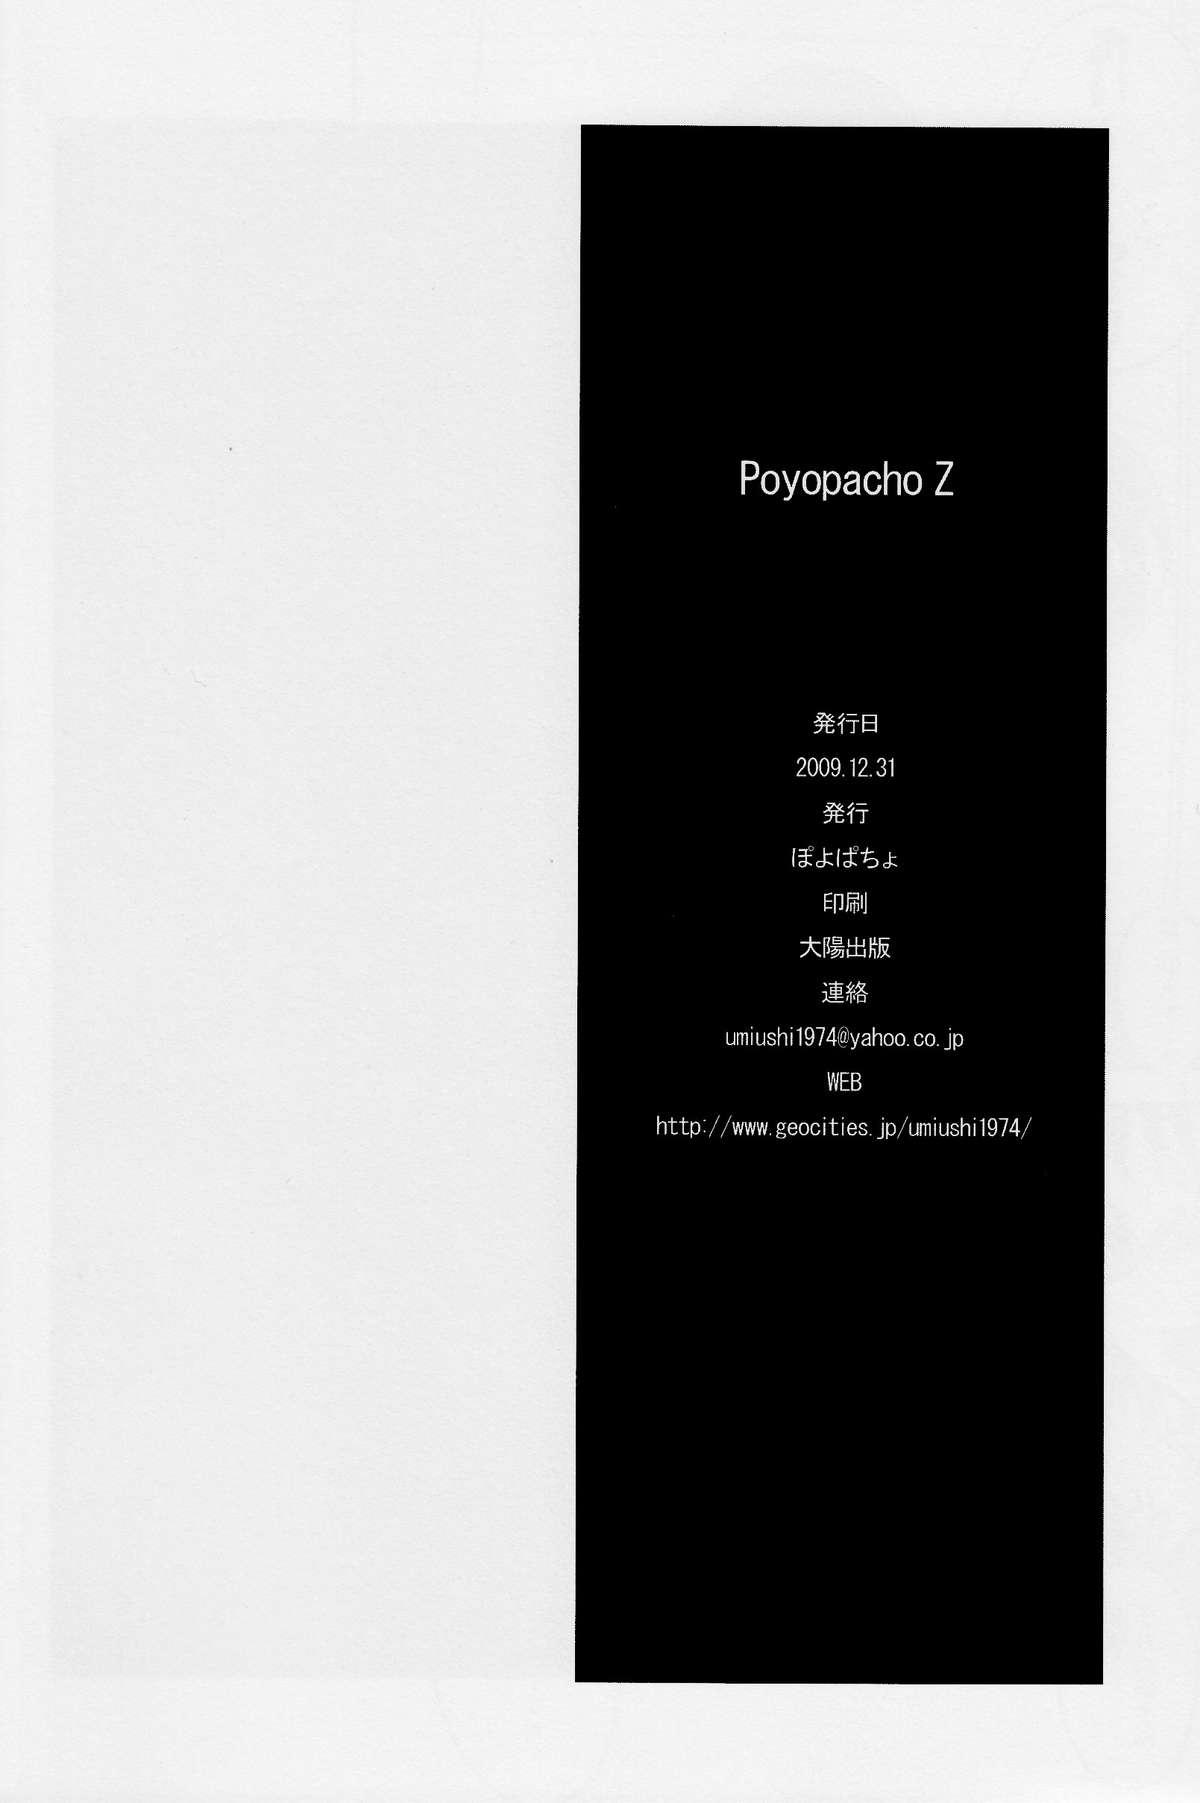 Poyopacho Z 25